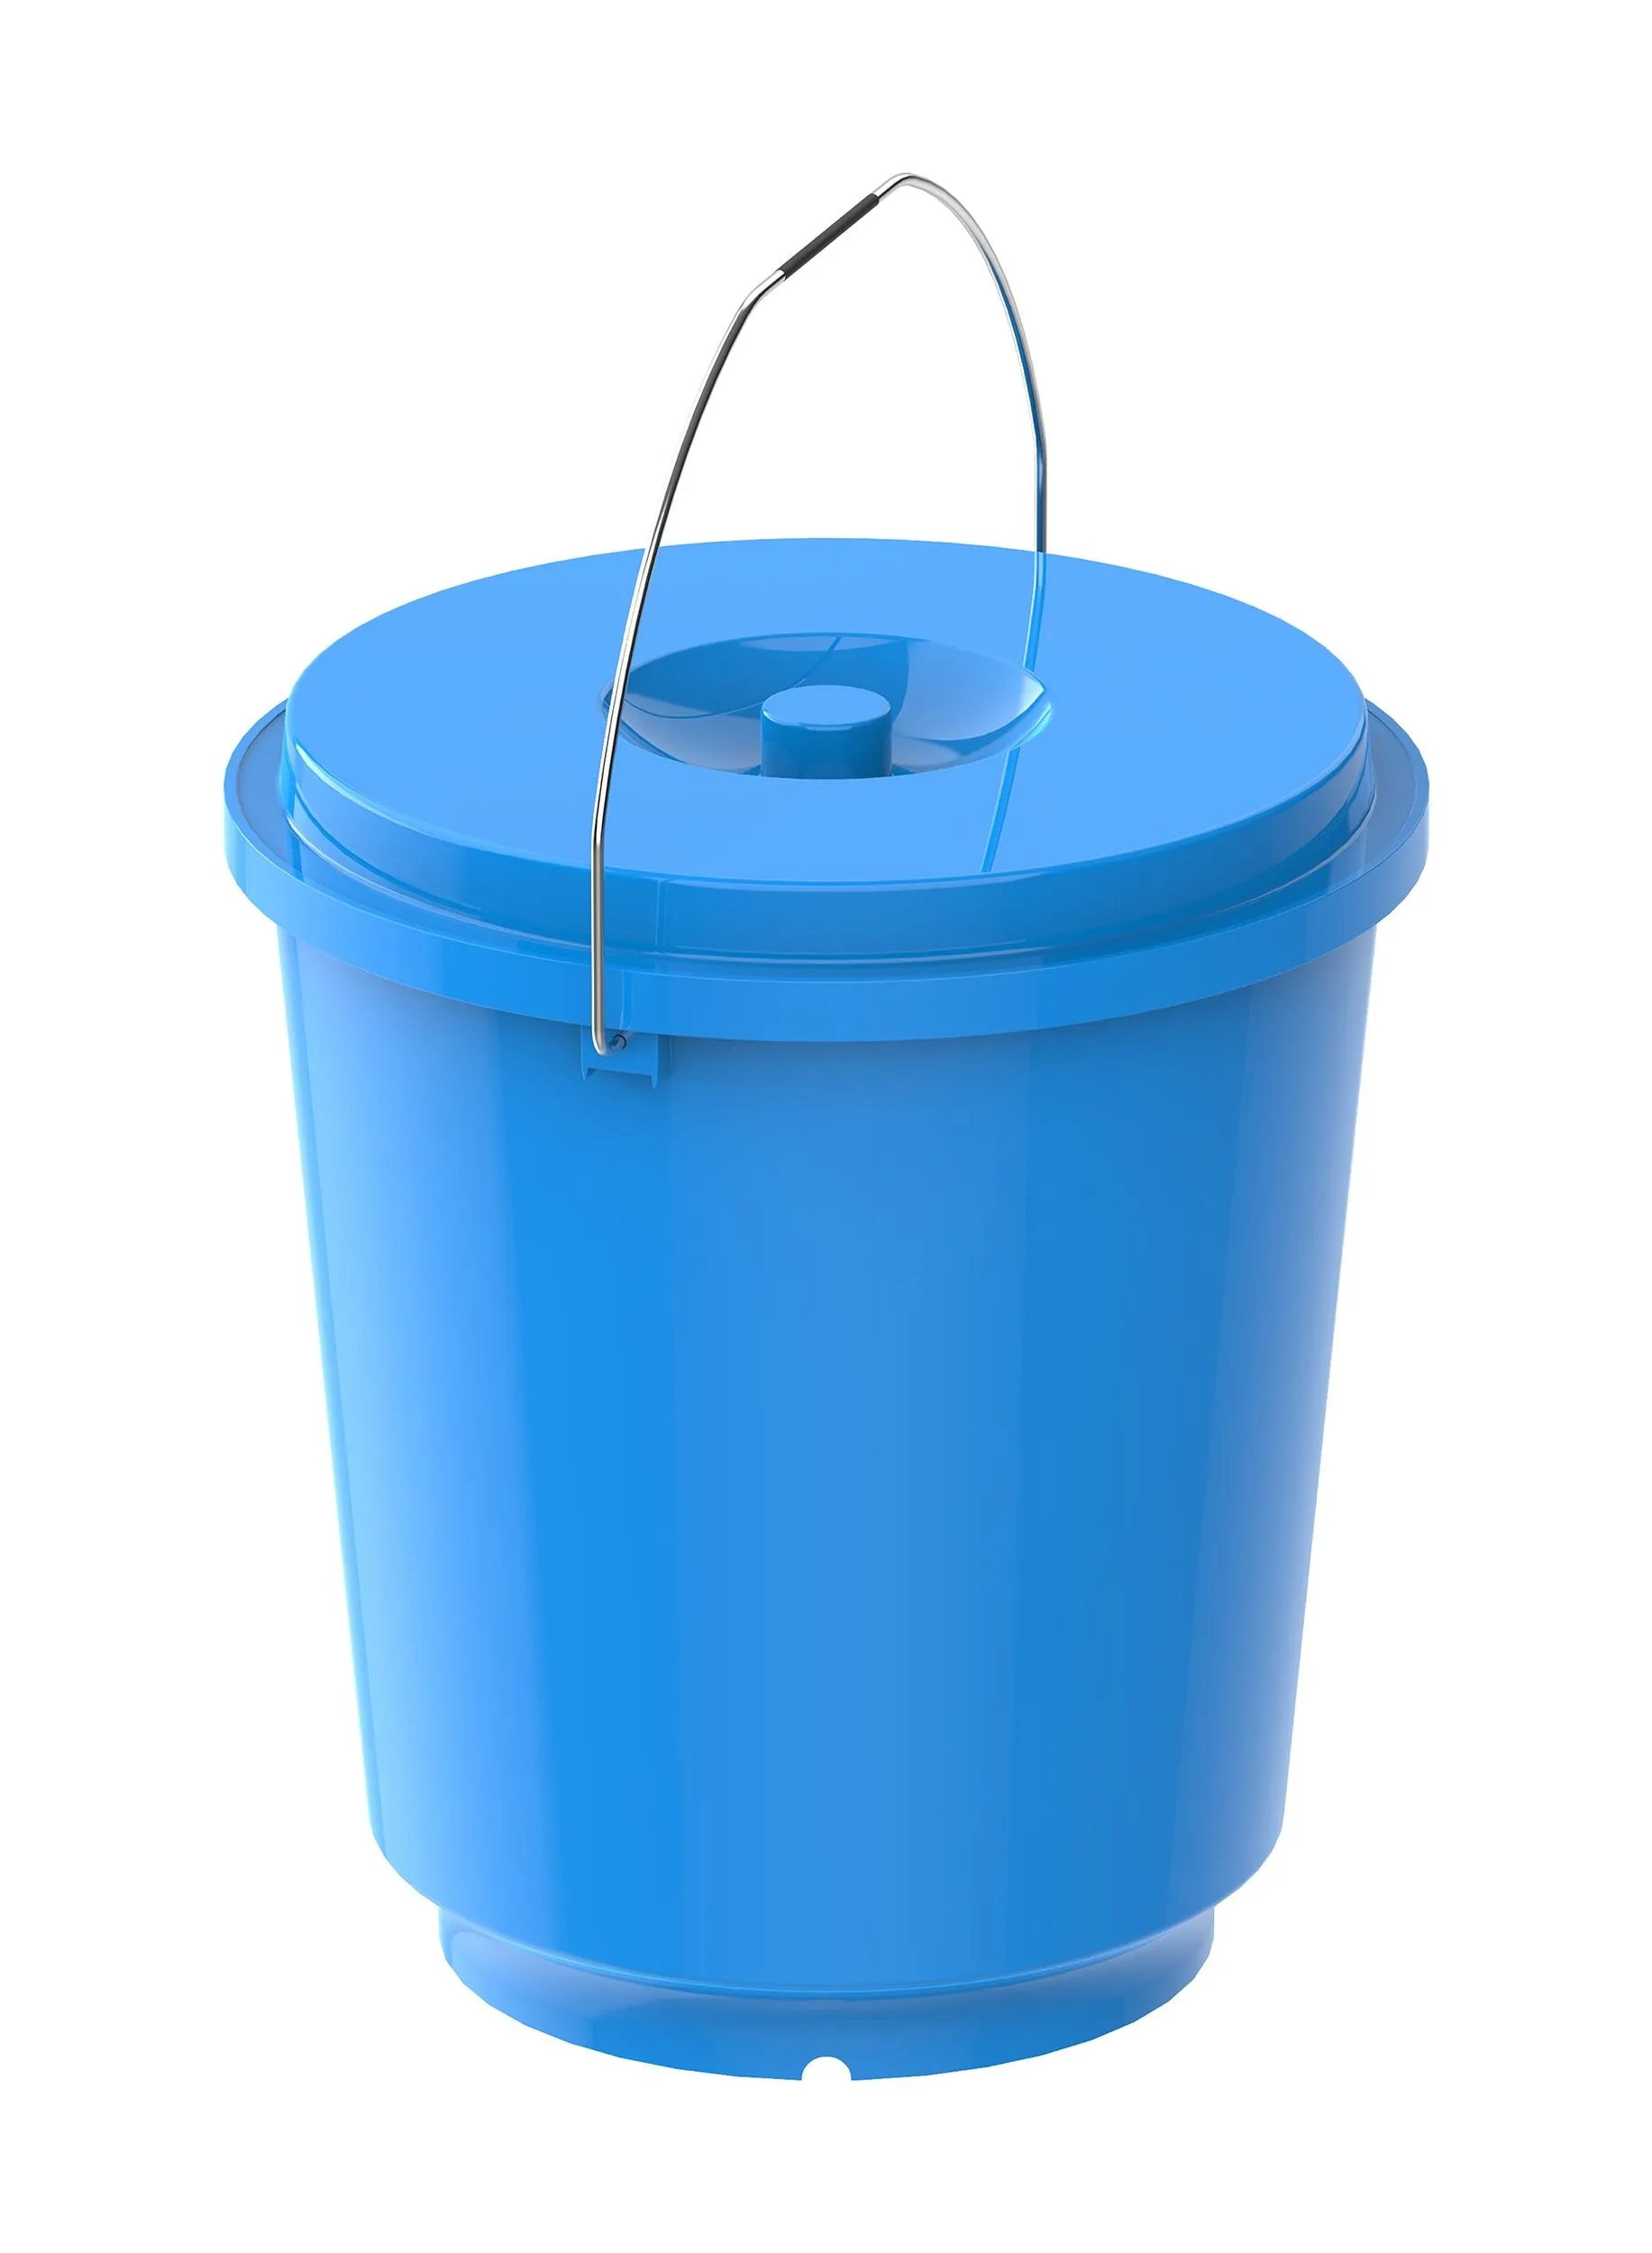 Cosmoplast EX 18L Round Plastic Bucket with Steel Handle